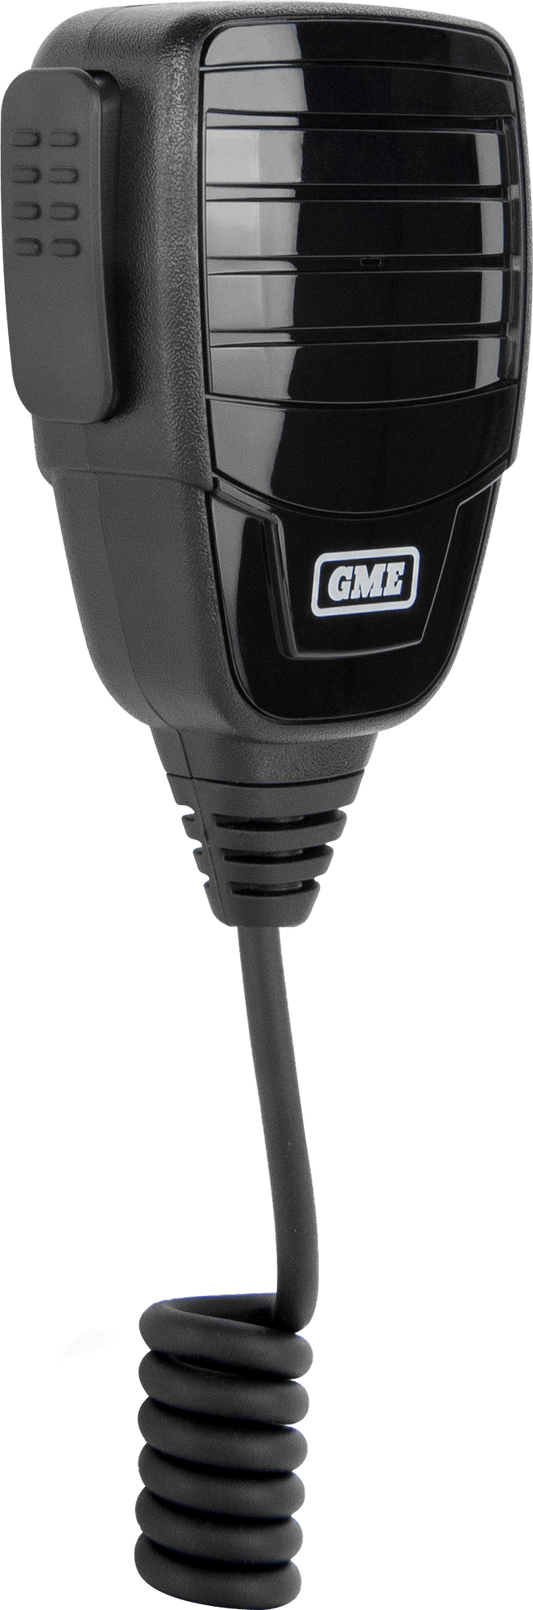 MC553B Heavy Duty GME Microphone